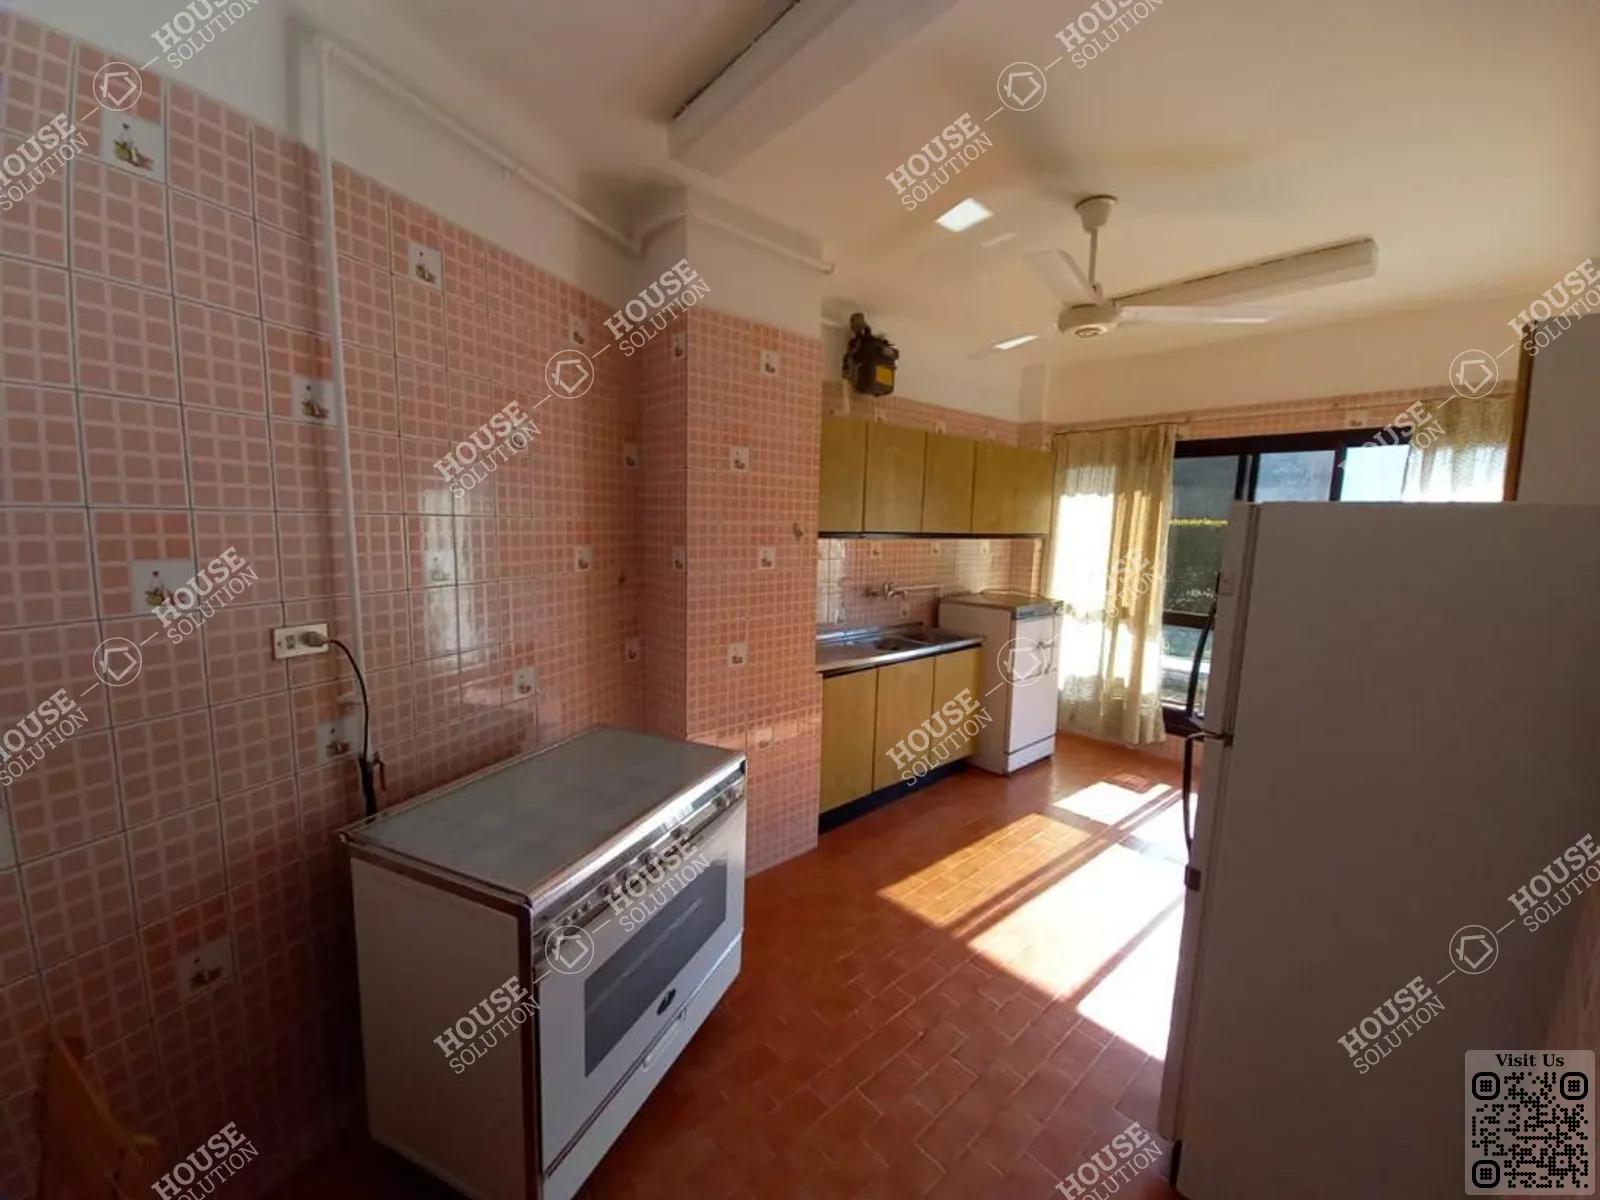 KITCHEN  @ Ground Floors For Rent In Maadi Maadi Sarayat Area: 200 m² consists of 3 Bedrooms 2 Bathrooms Furnished 5 stars #5358-2